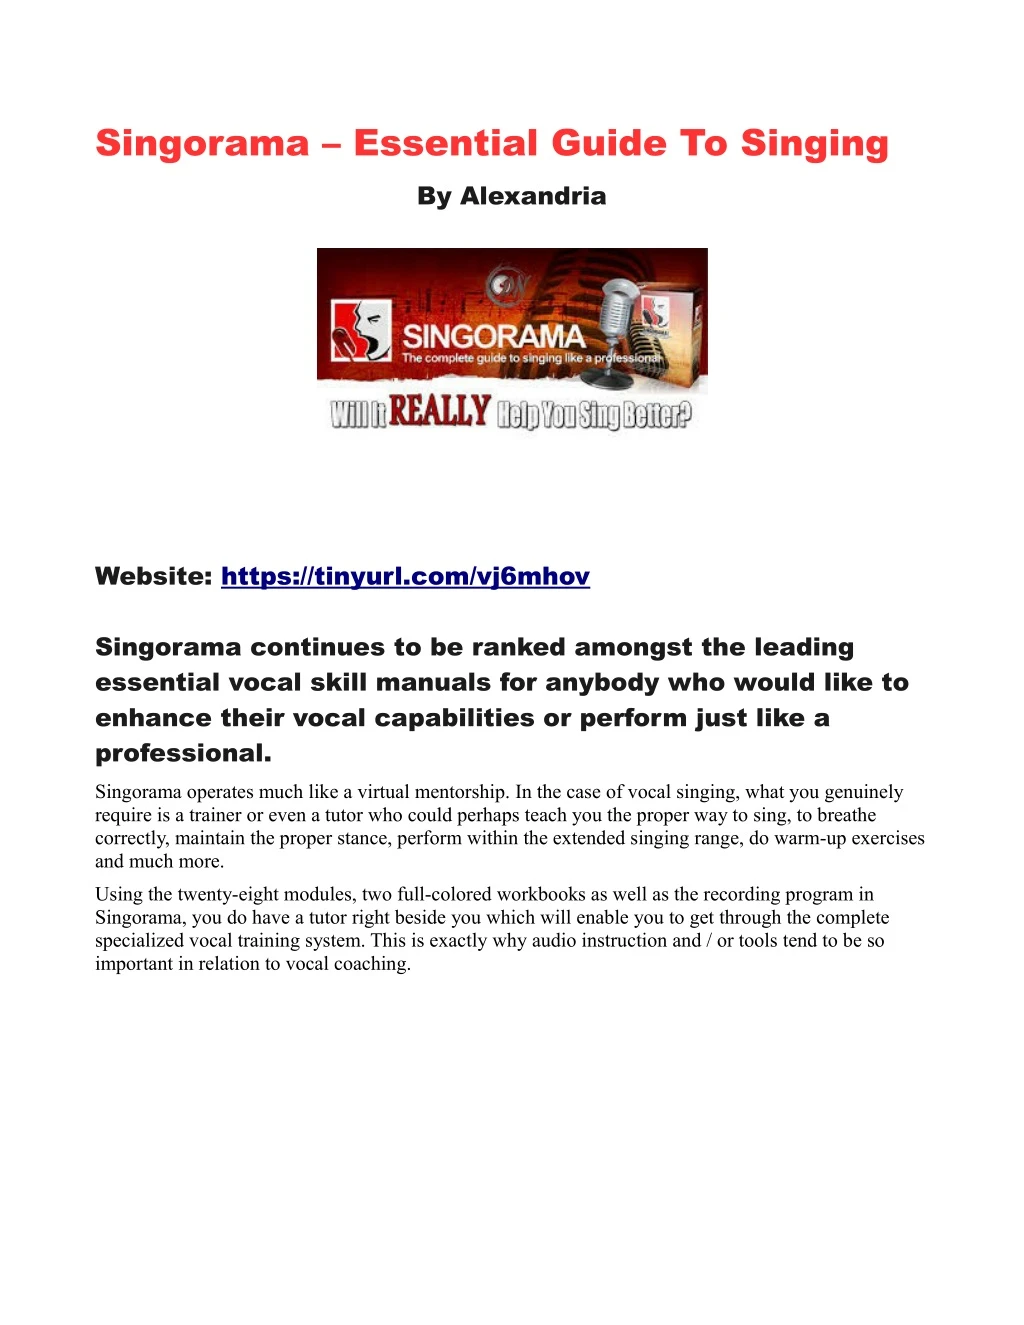 singorama essential guide to singing by alexandria